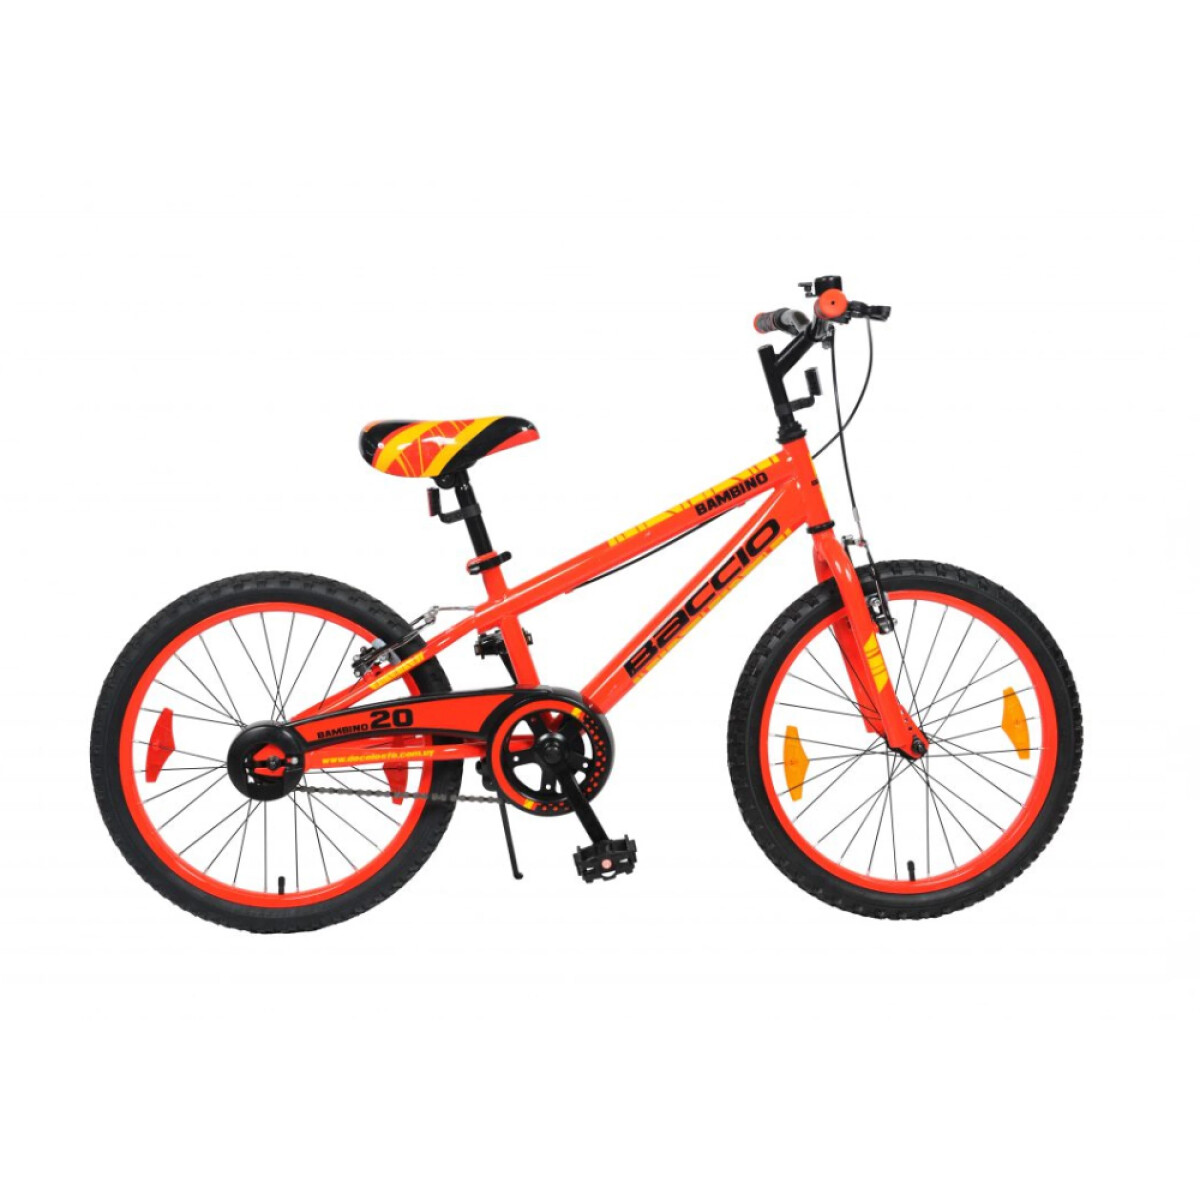 Bicicleta Baccio Bambino rodado 20 - Naranja y Amarillo 